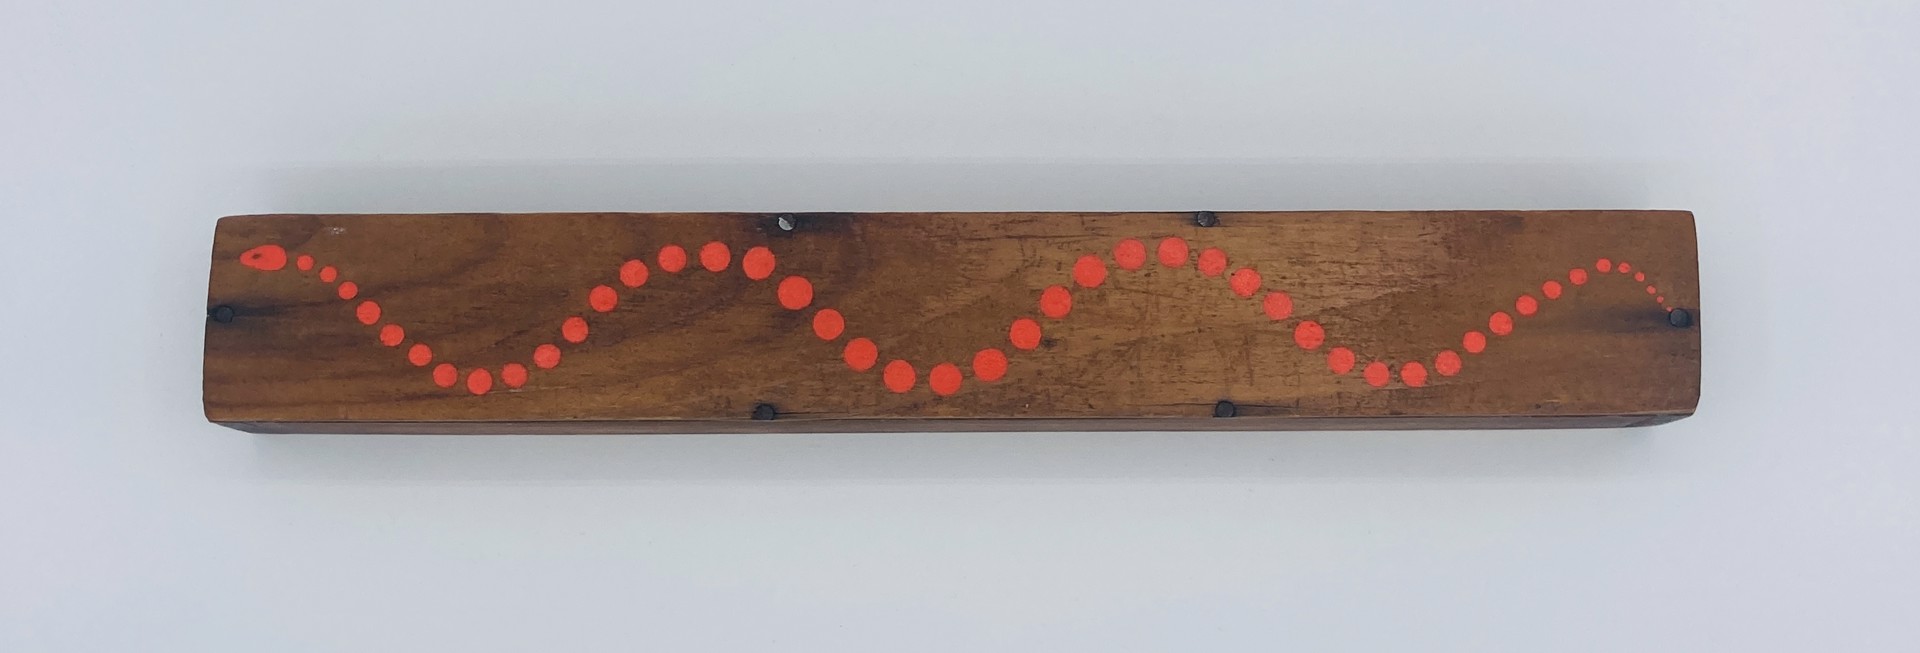 Red Serpent on found wooden box by Matt Messinger